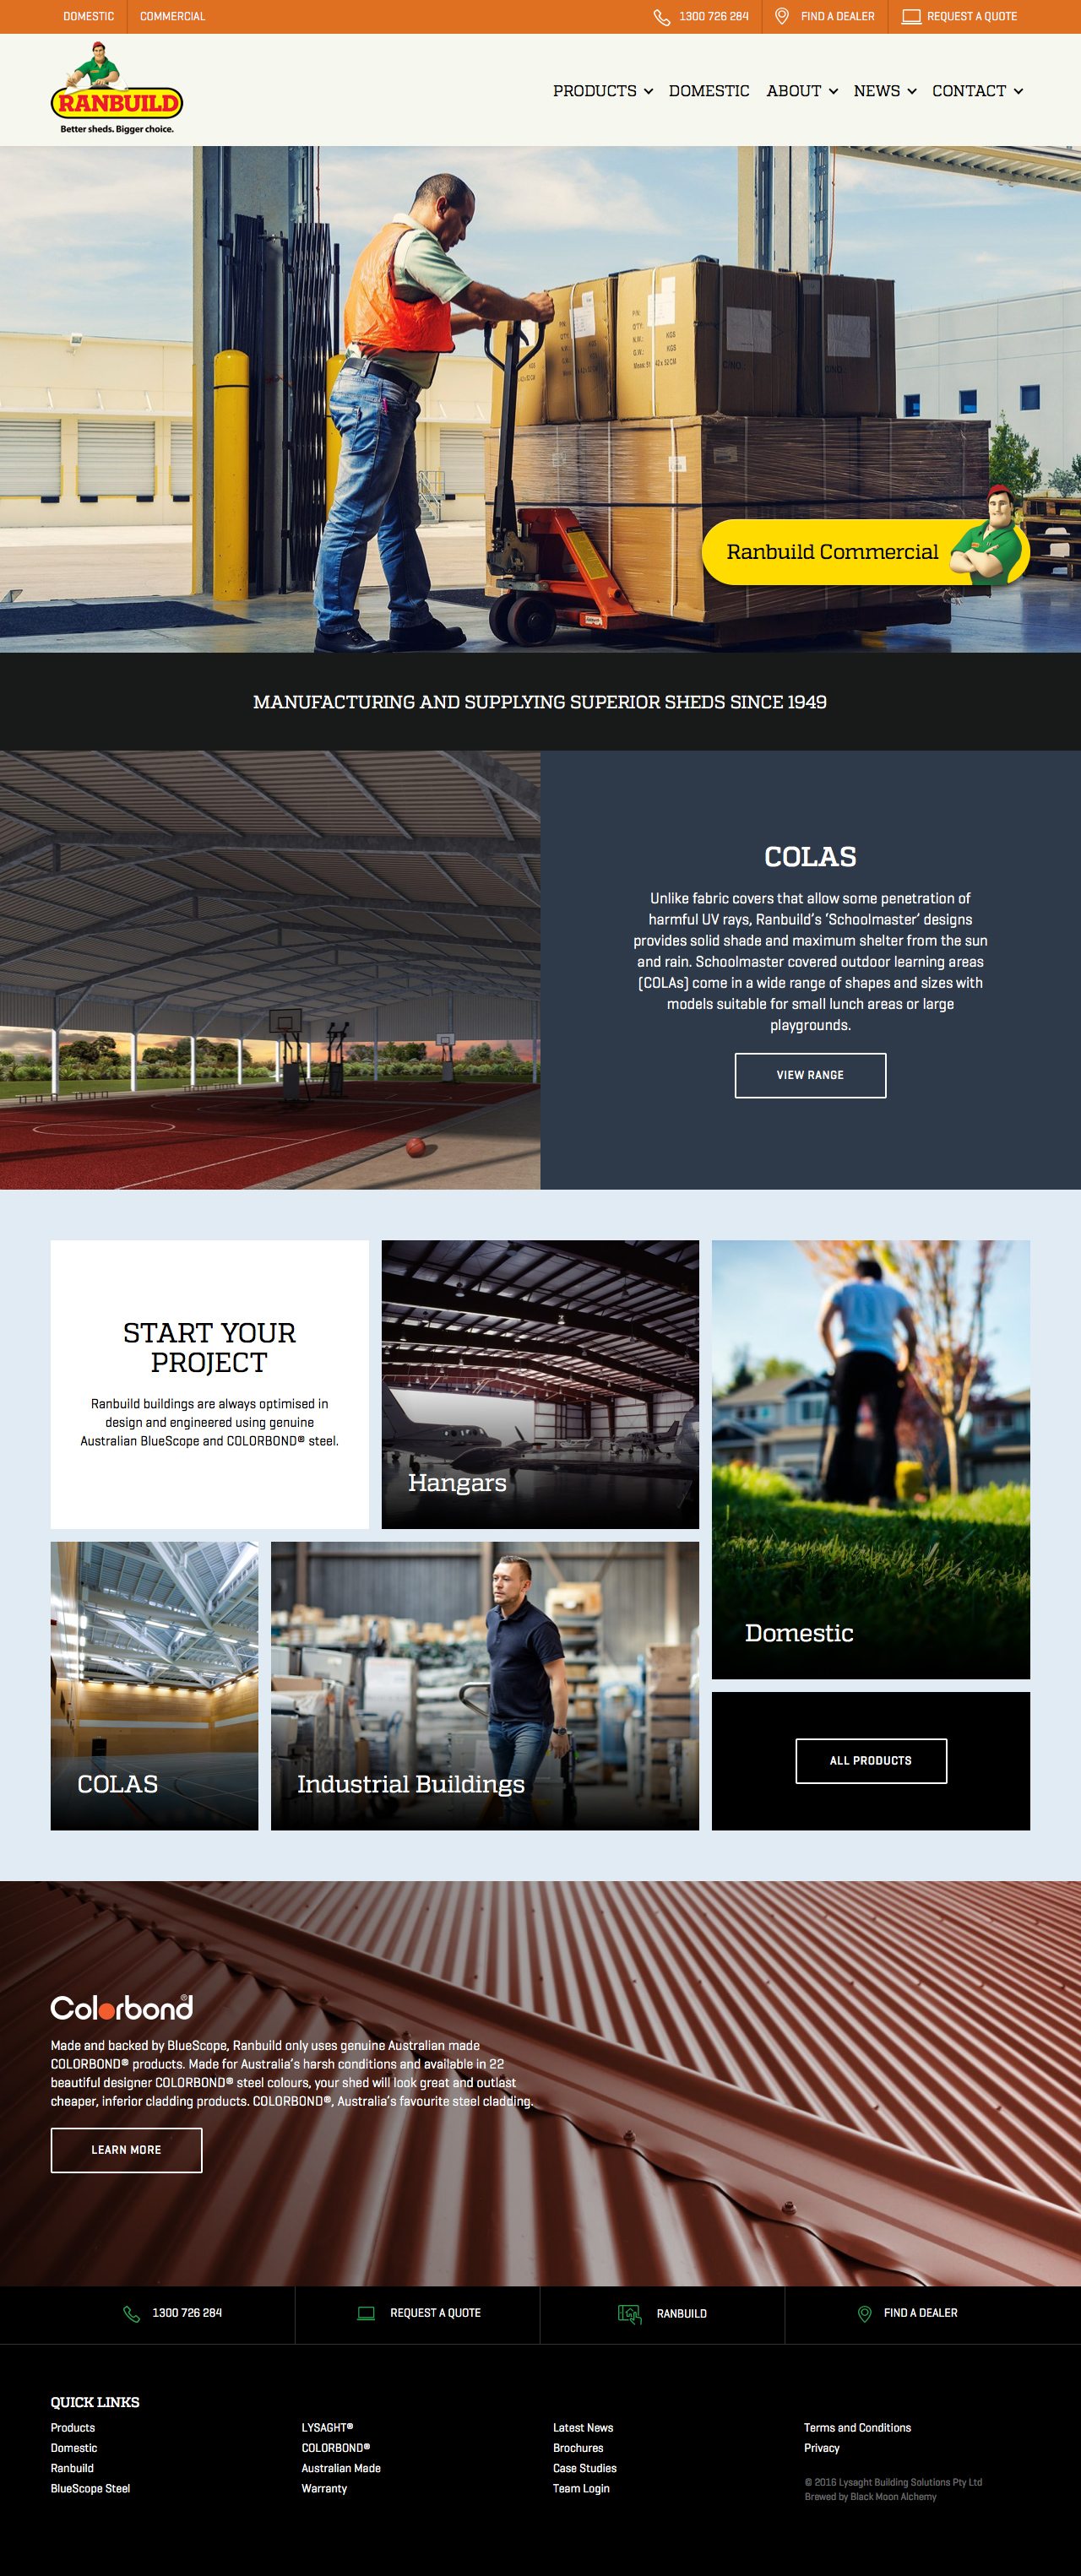 Ranbuild Commercial Website Homepage